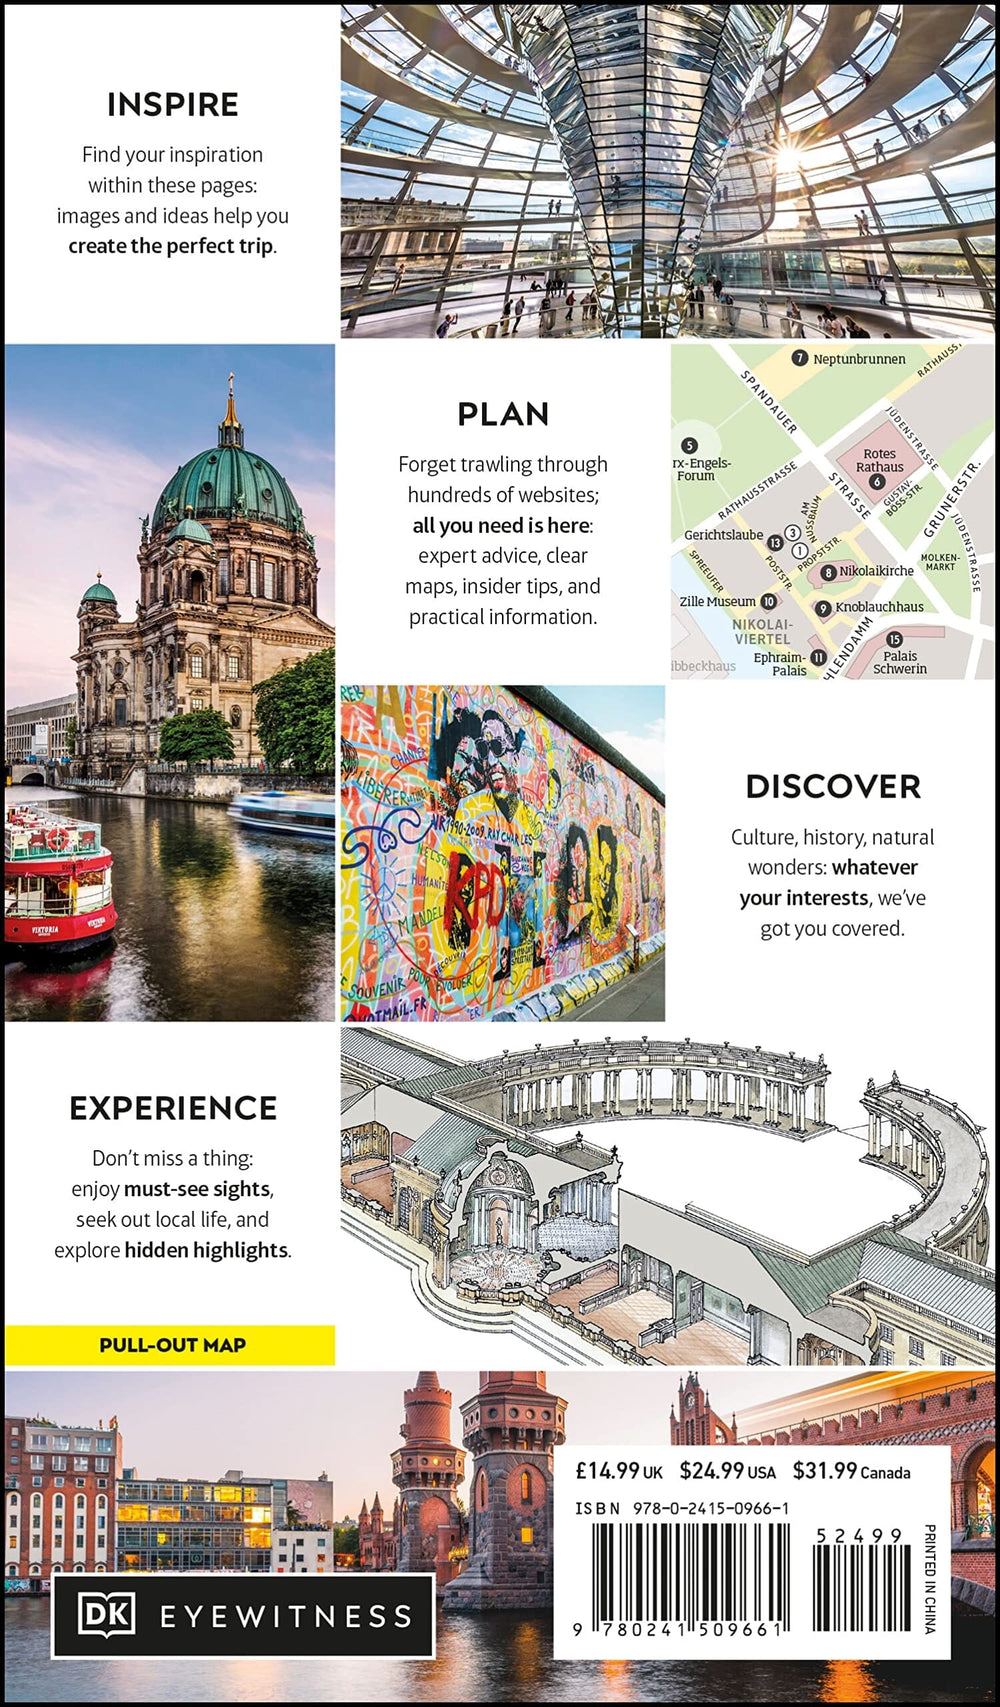 Guide de voyage (en anglais) - Berlin | Eyewitness guide de voyage Eyewitness 